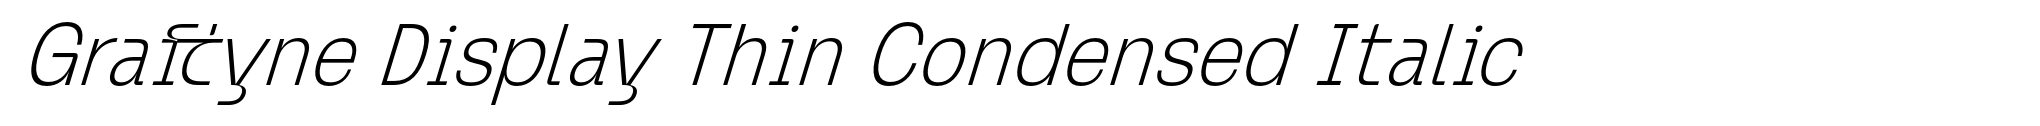 Graftyne Display Thin Condensed Italic image